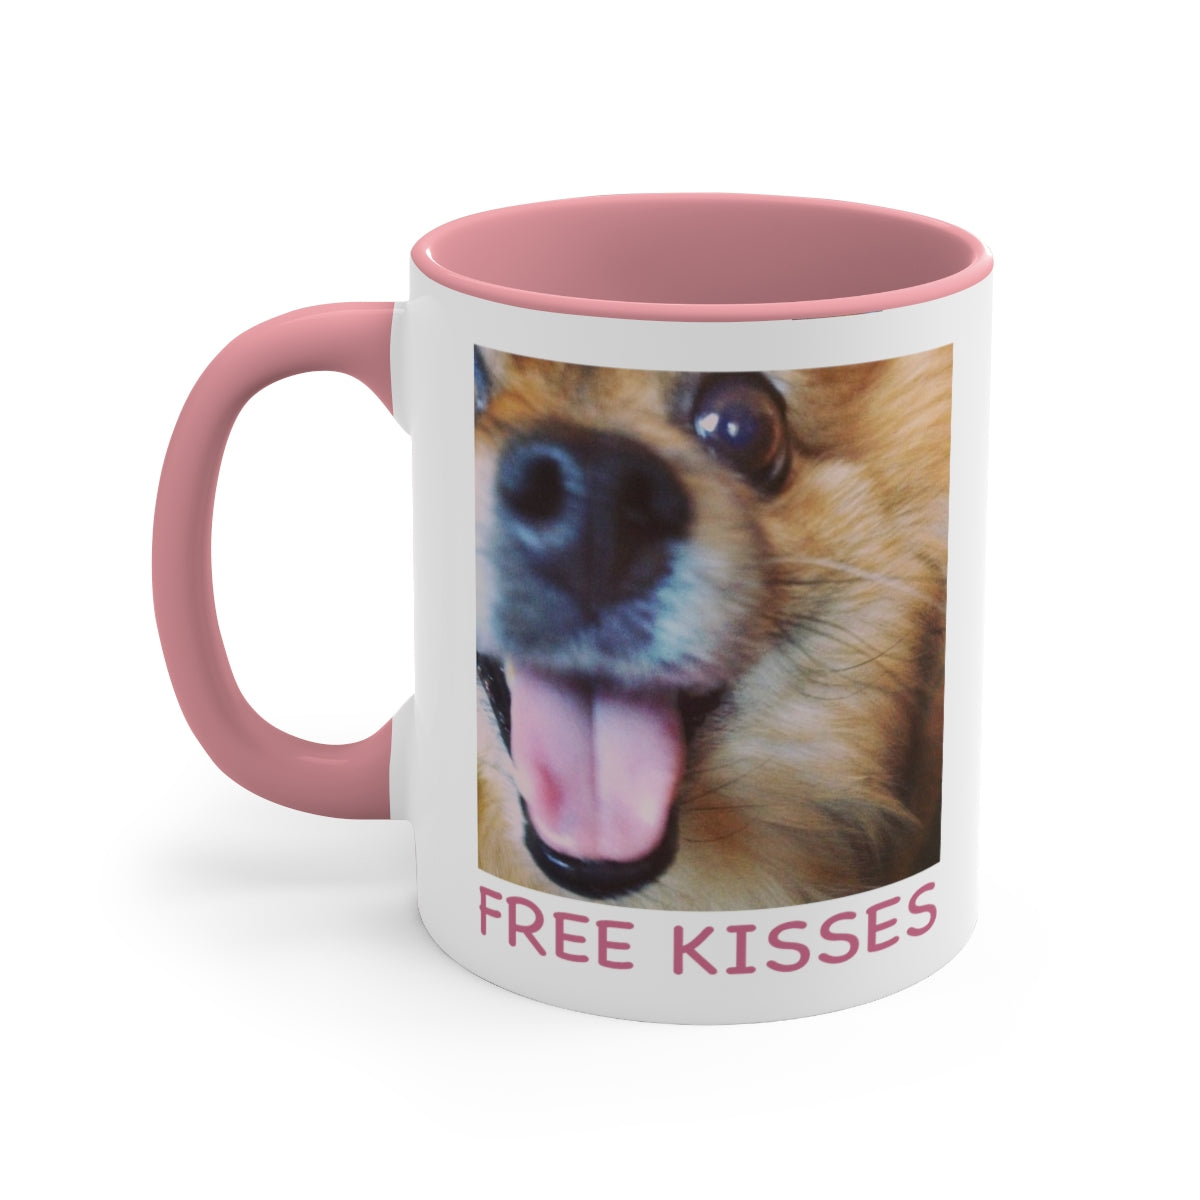 FREE KISSES. Dog Accent Coffee Mug, 11oz